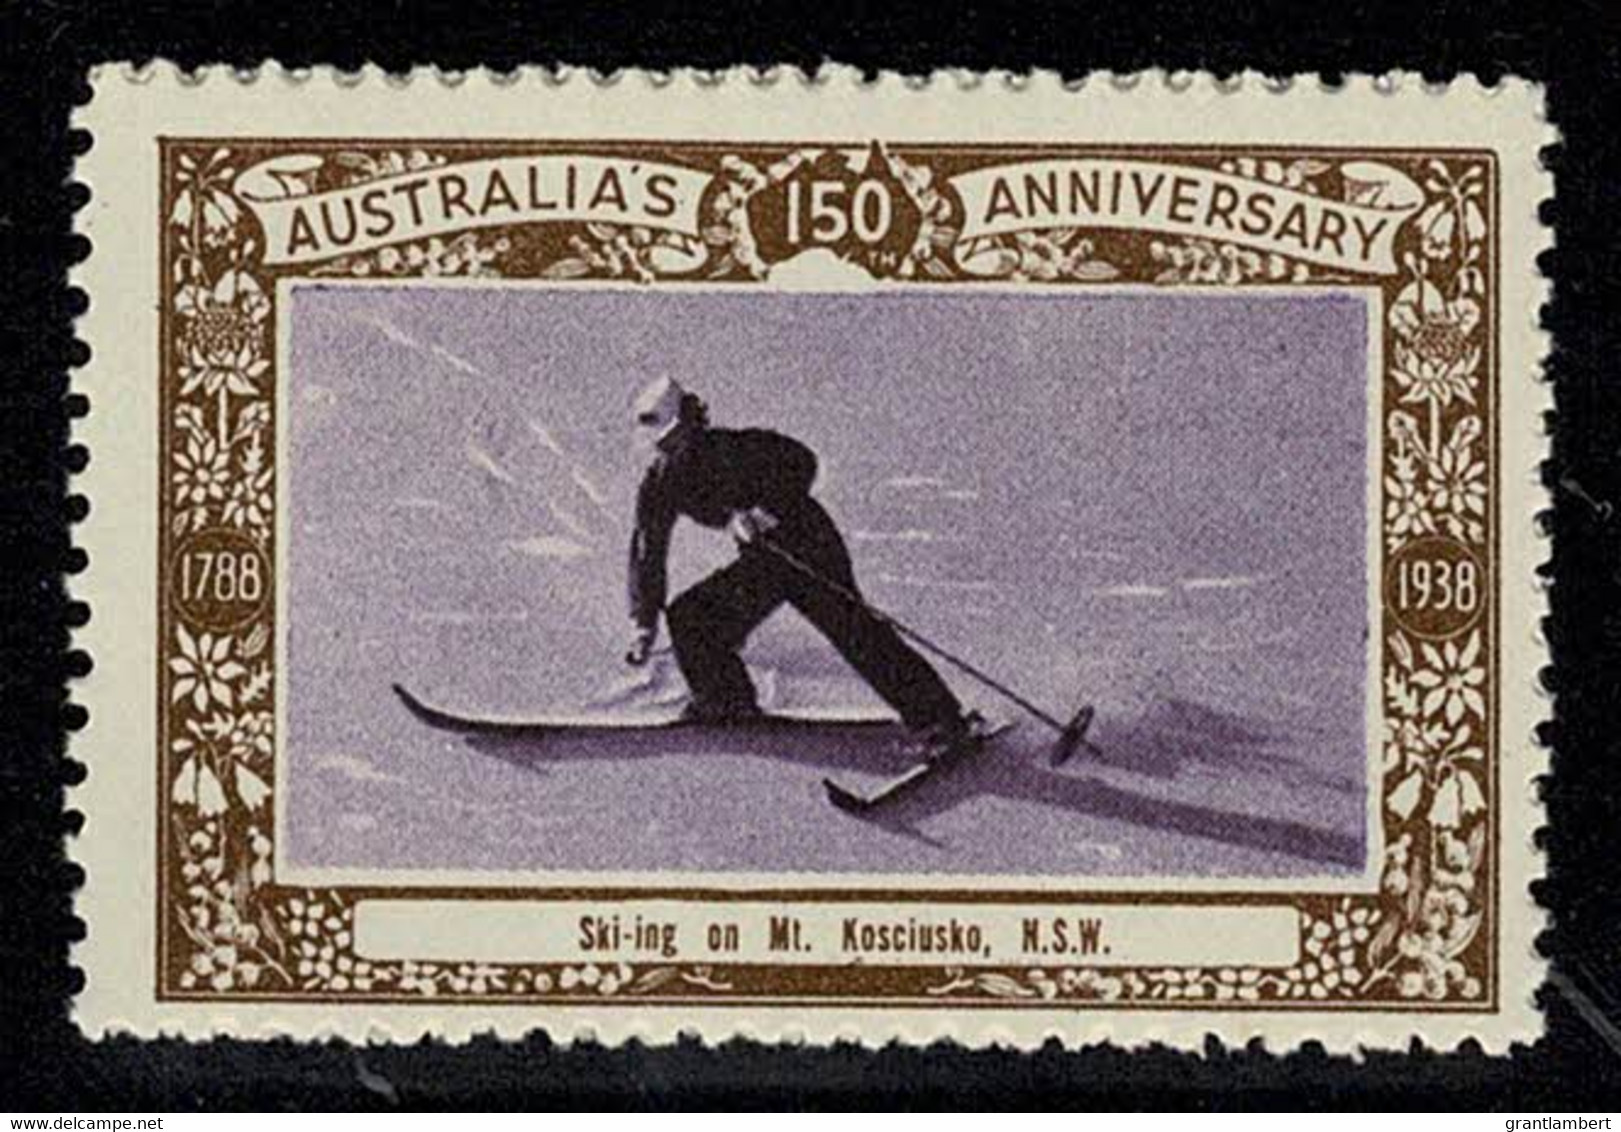 Australia 1938 Ski-ing On Mt. Kosciusko - NSW 150th Anniversary Cinderella MNH - Cinderella